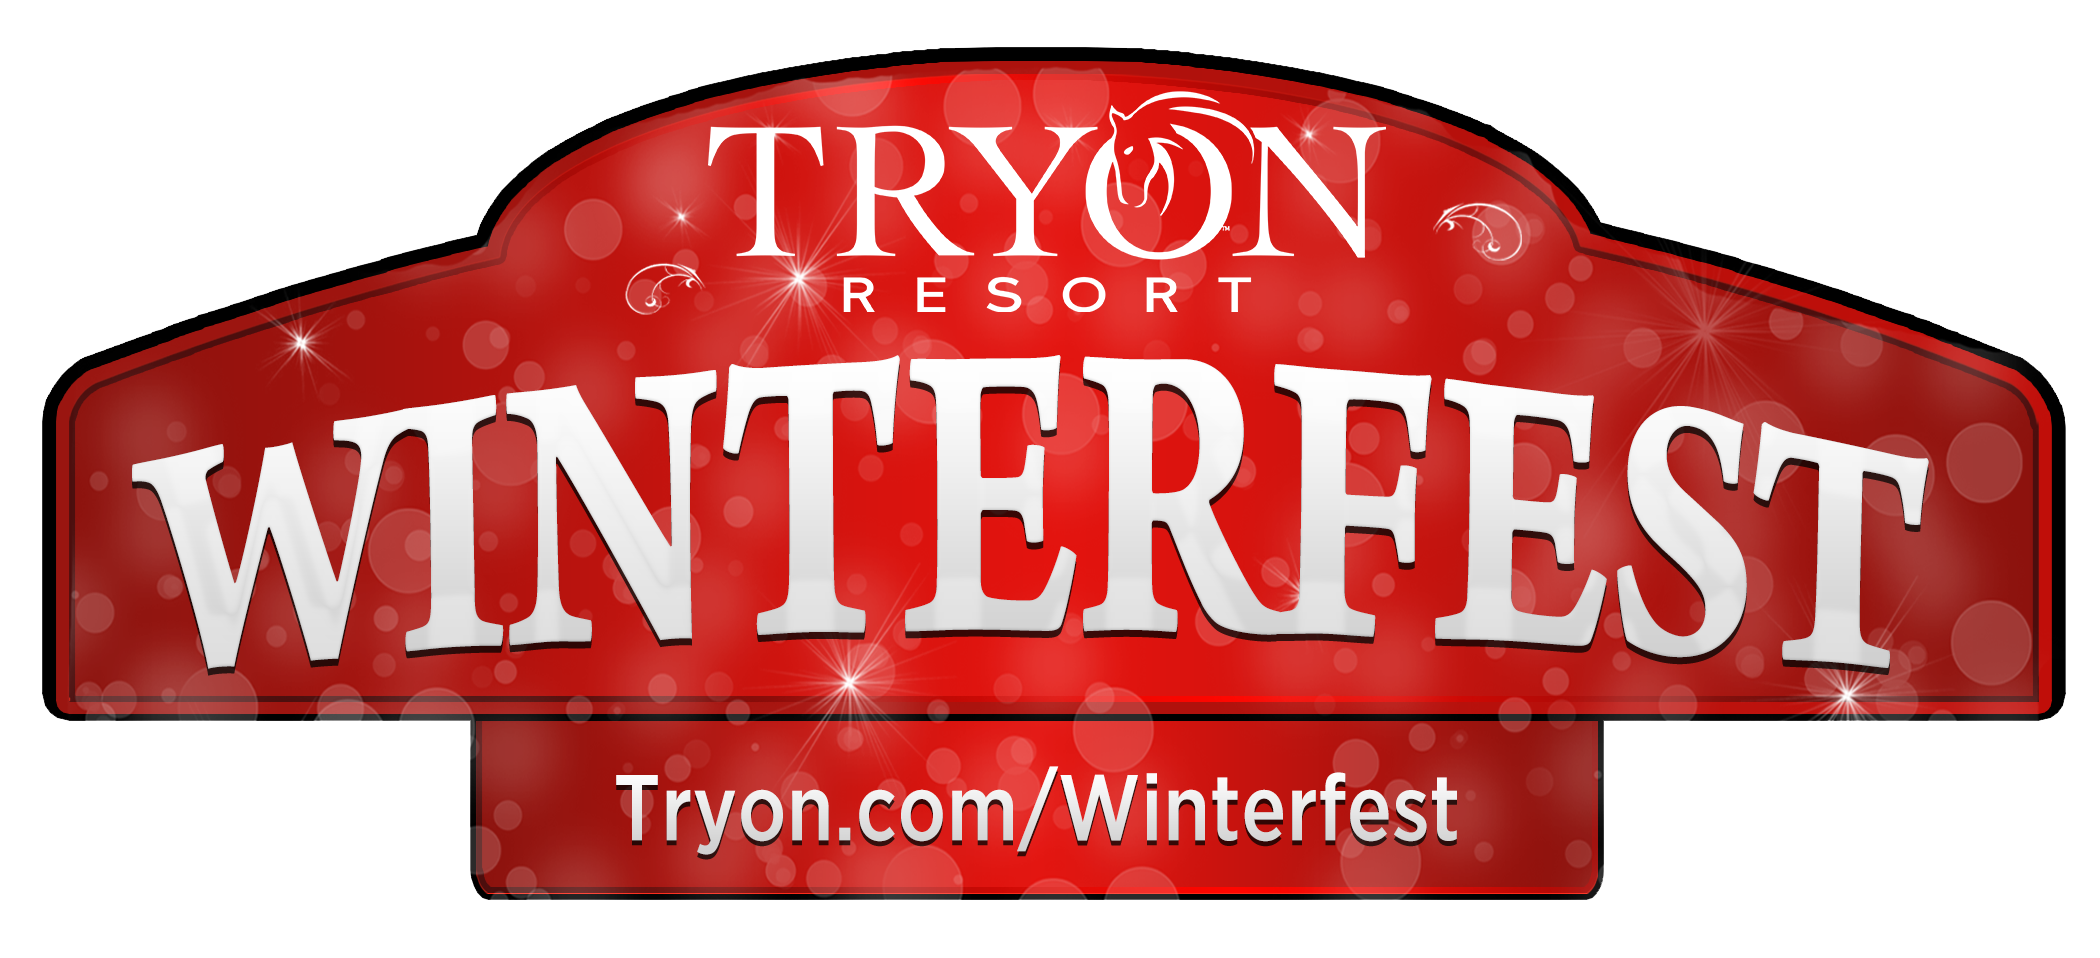 Tryon Resort Winterfest Logo Lockup